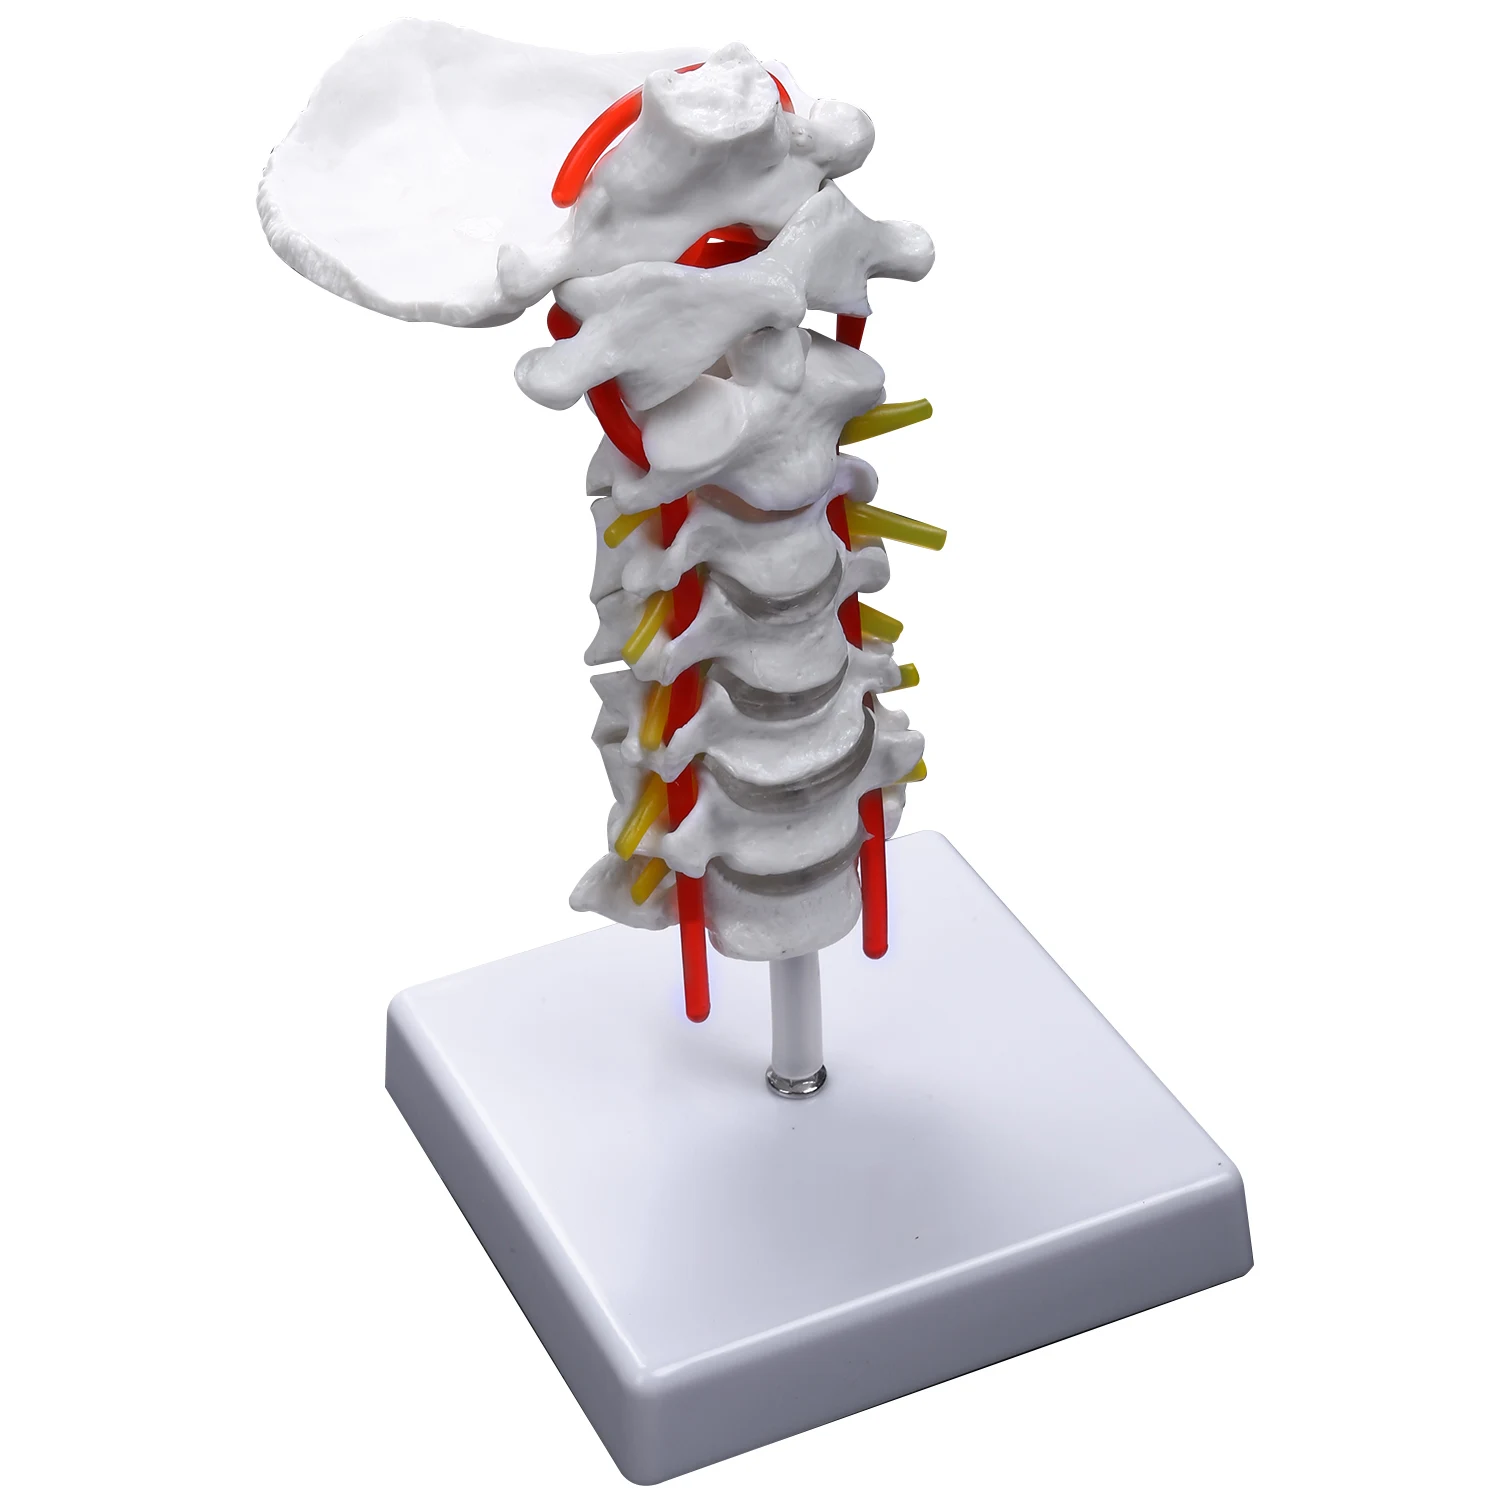 

Cervical Vertebra Arteria Spine Spinal Nerves Anatomical Model Anatomy for Science Classroom Study Display Teaching Model